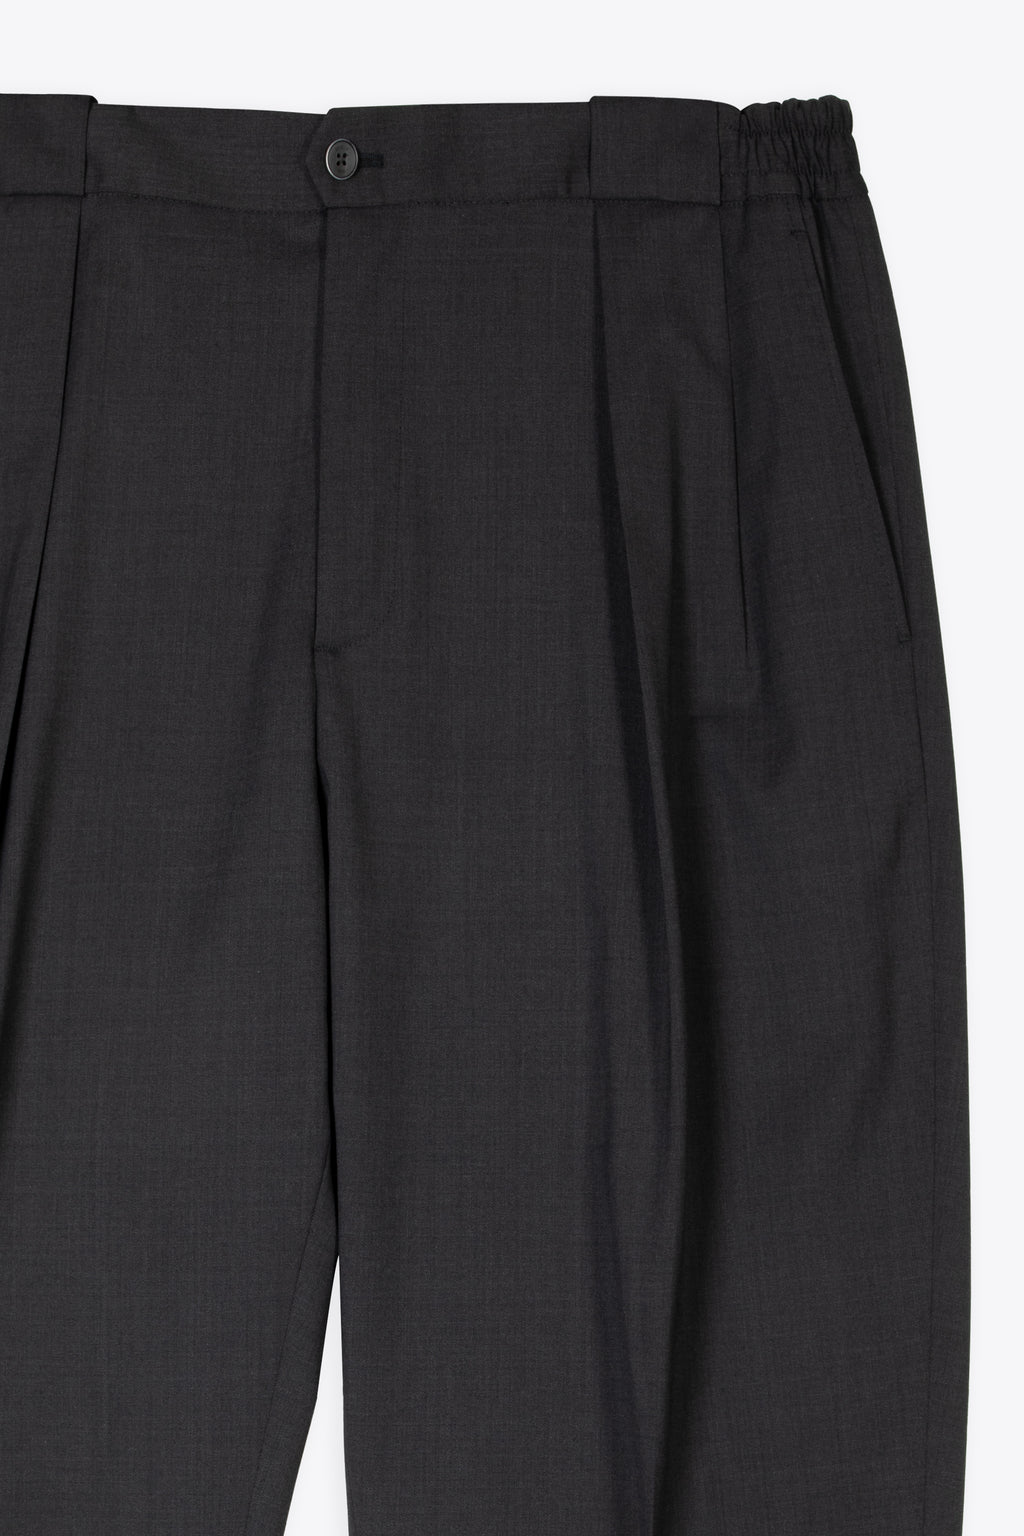 alt-image__Grey-pleatd-pant-with-elastic-waistband---Portobellos